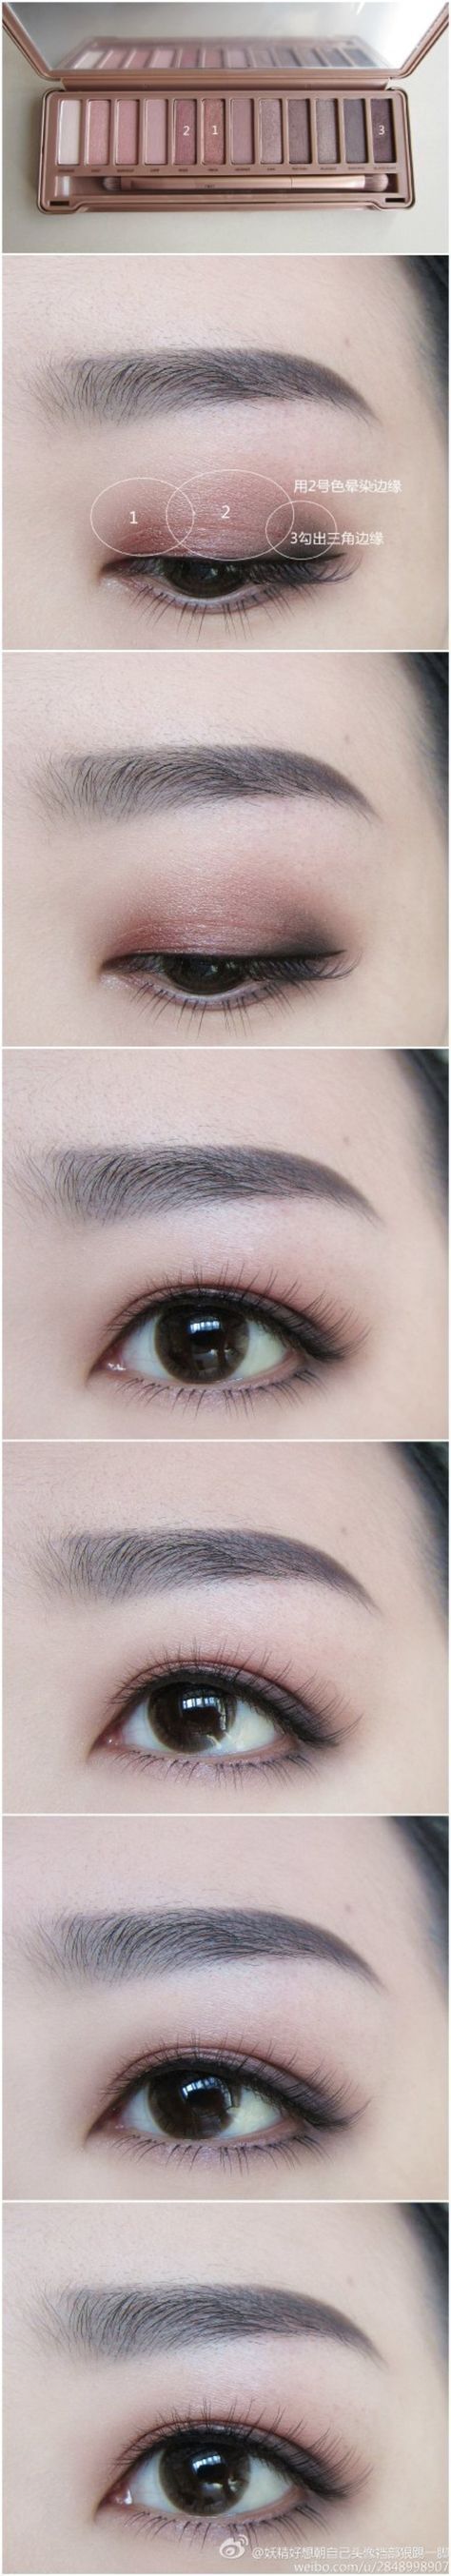 Asian makeup using color eye contact lenses #circlelens. SHOP from http://www.eyecandys.com